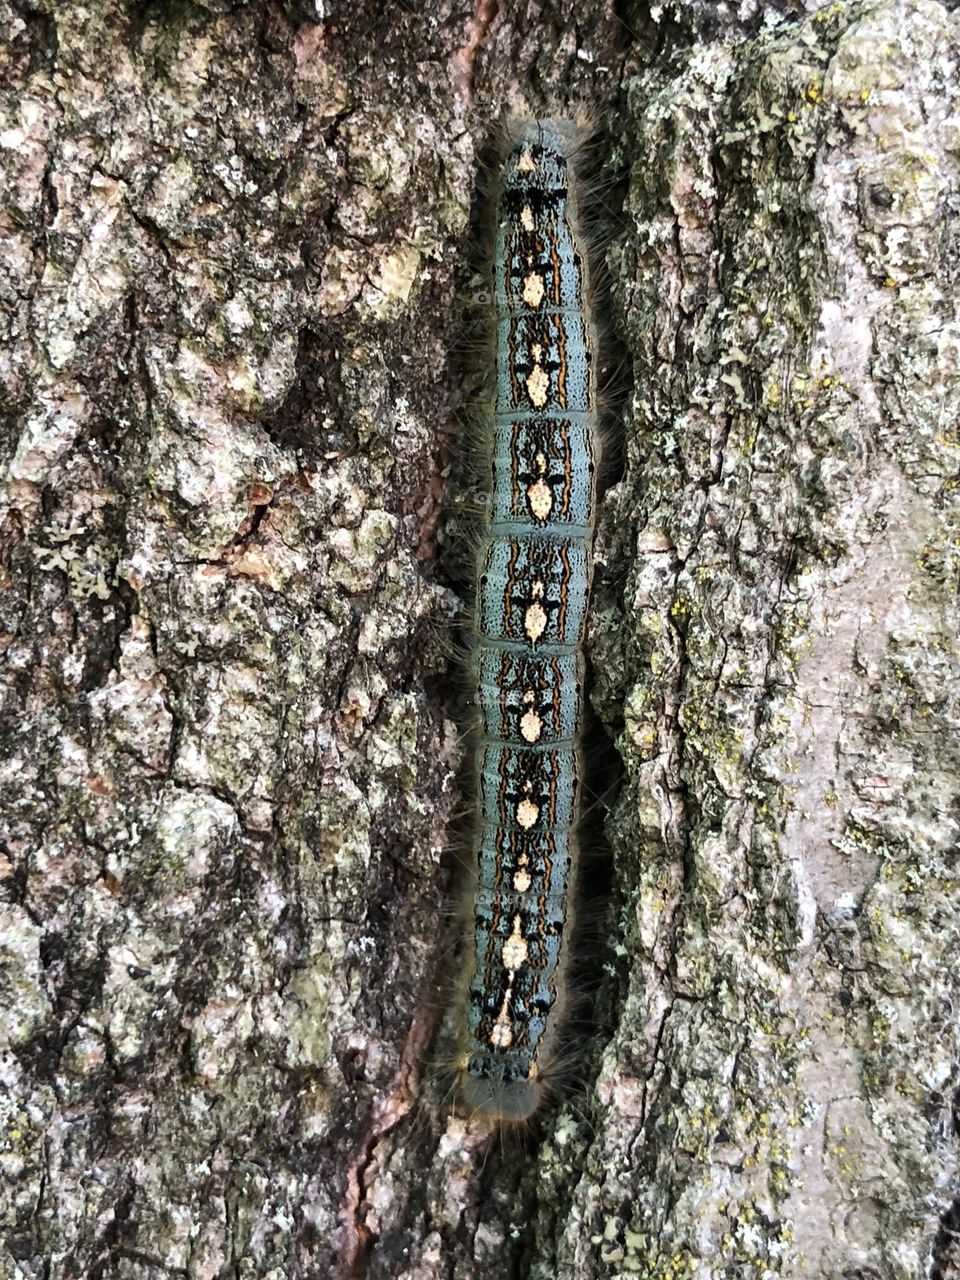 Nesting caterpillar